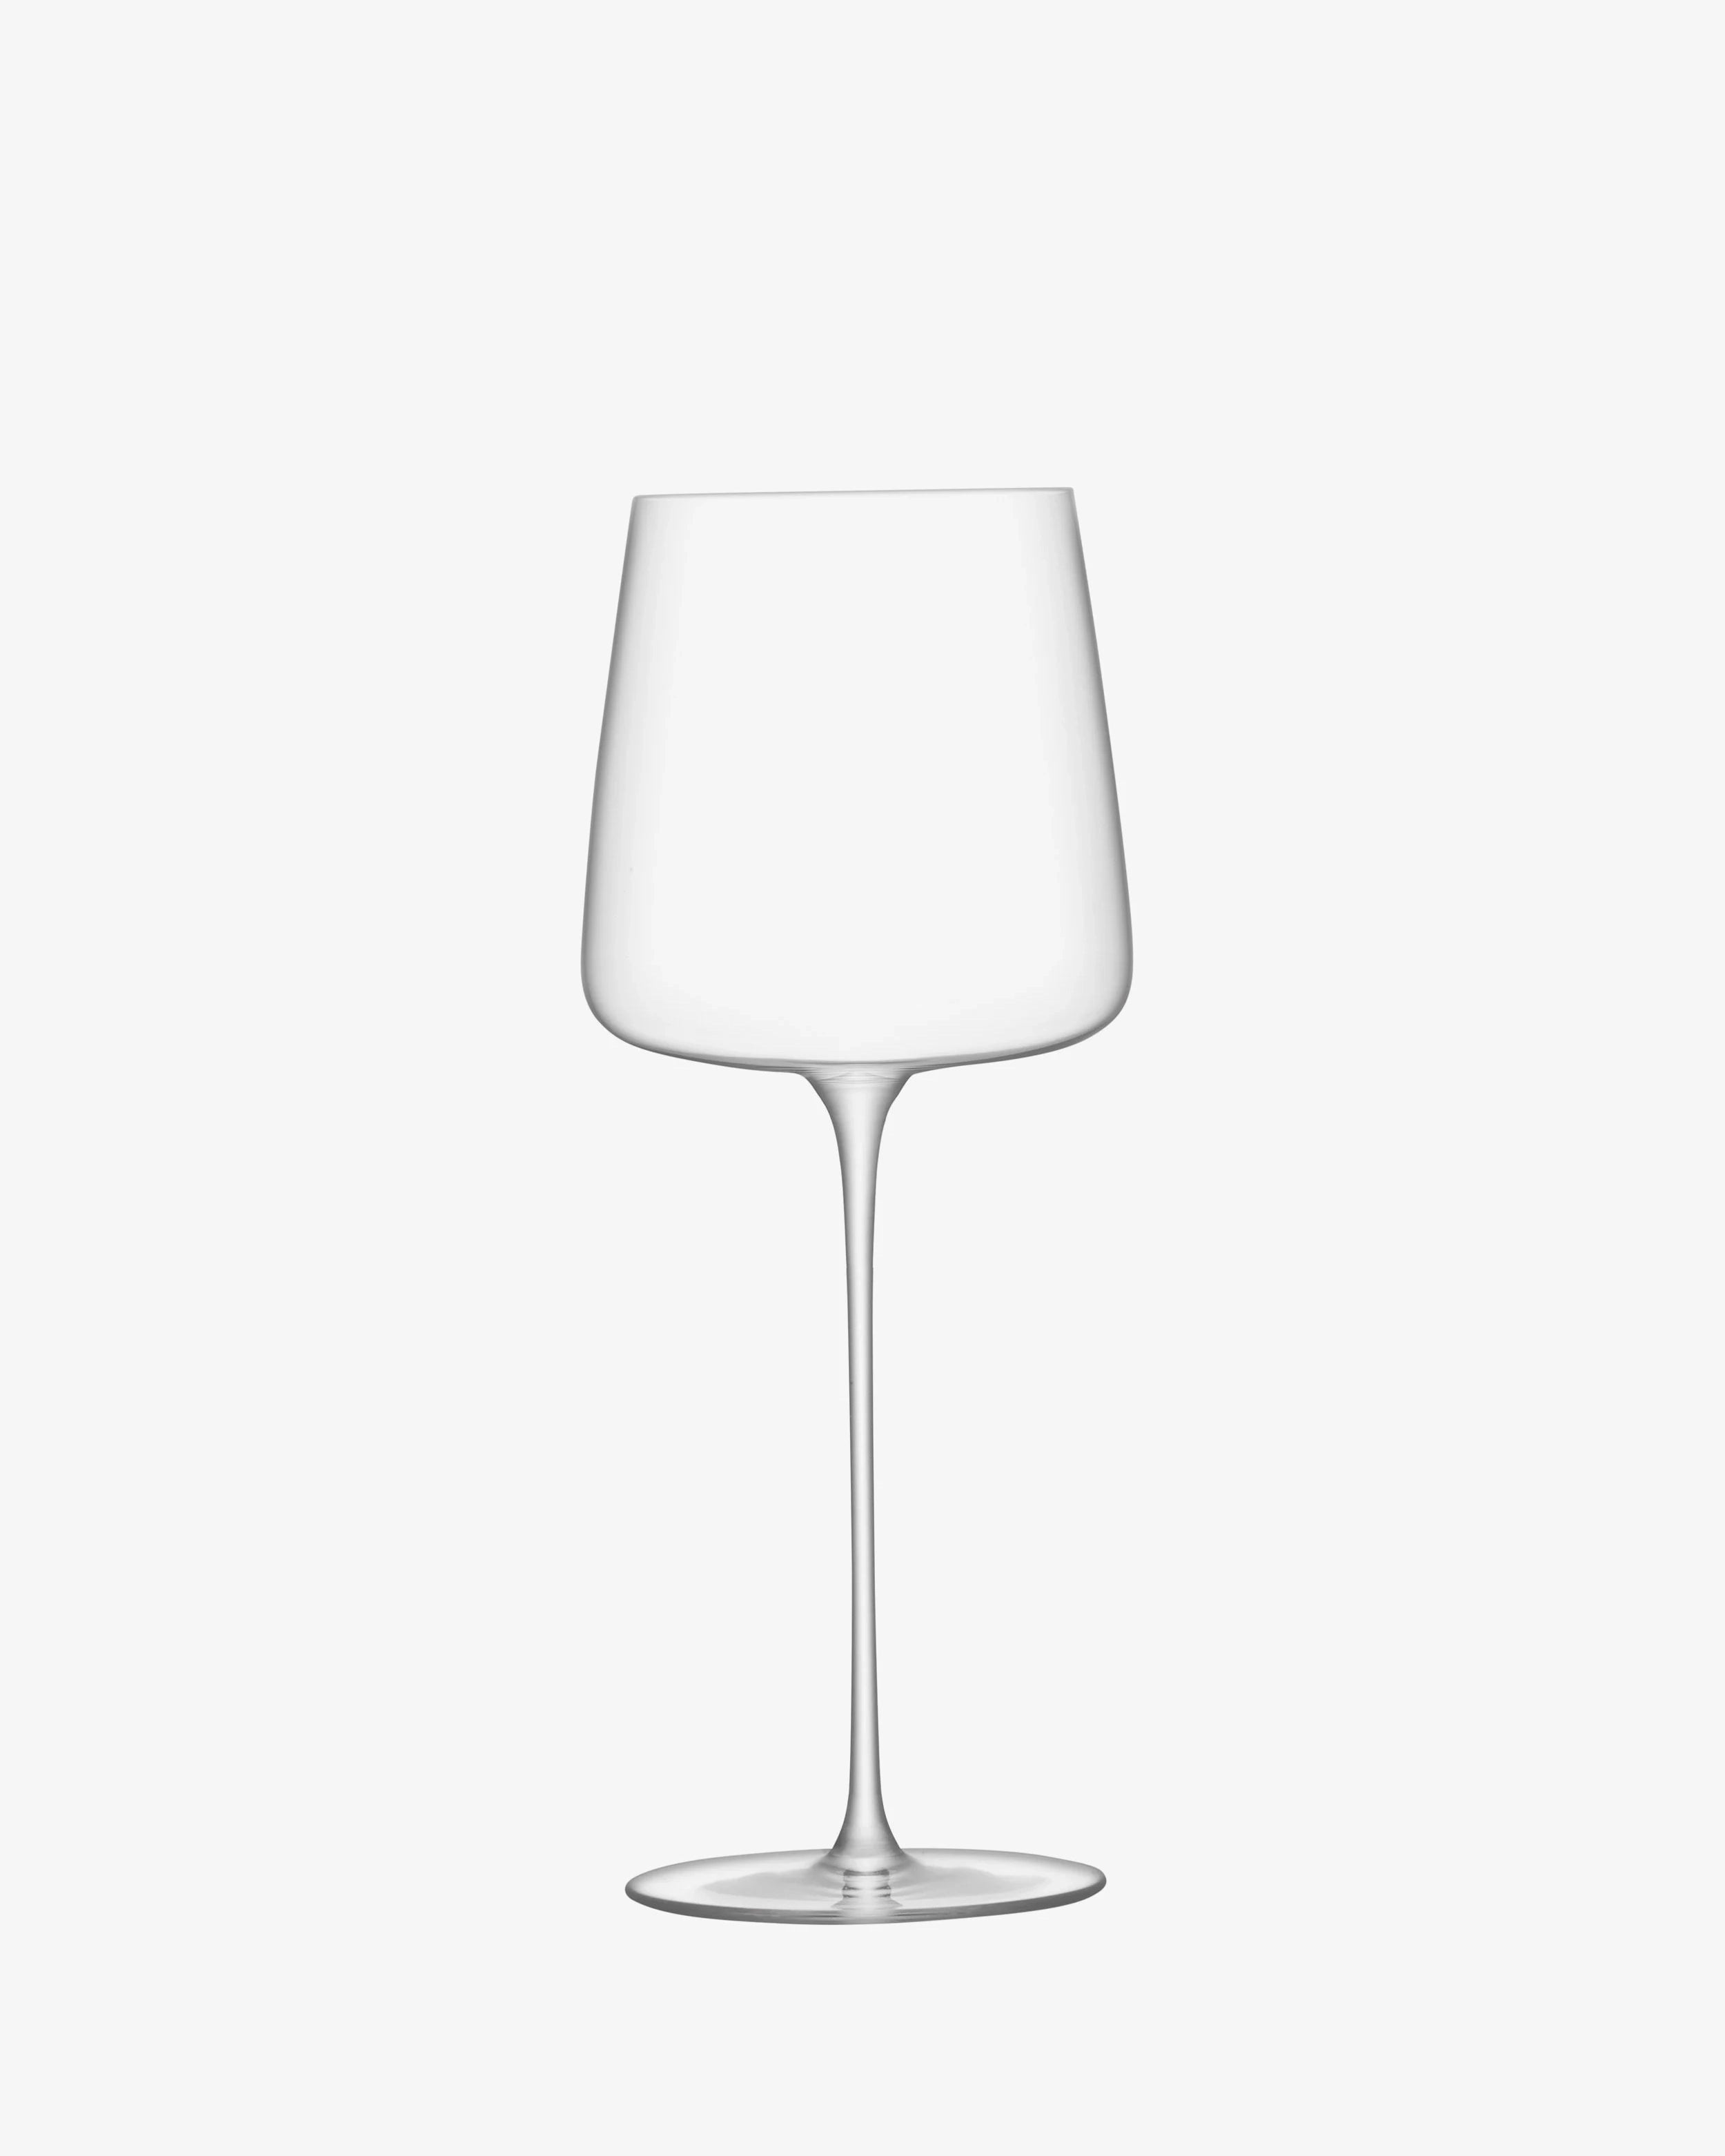 Metropolitan Grand Cru Wine Glass - Set of 4 | Anboise